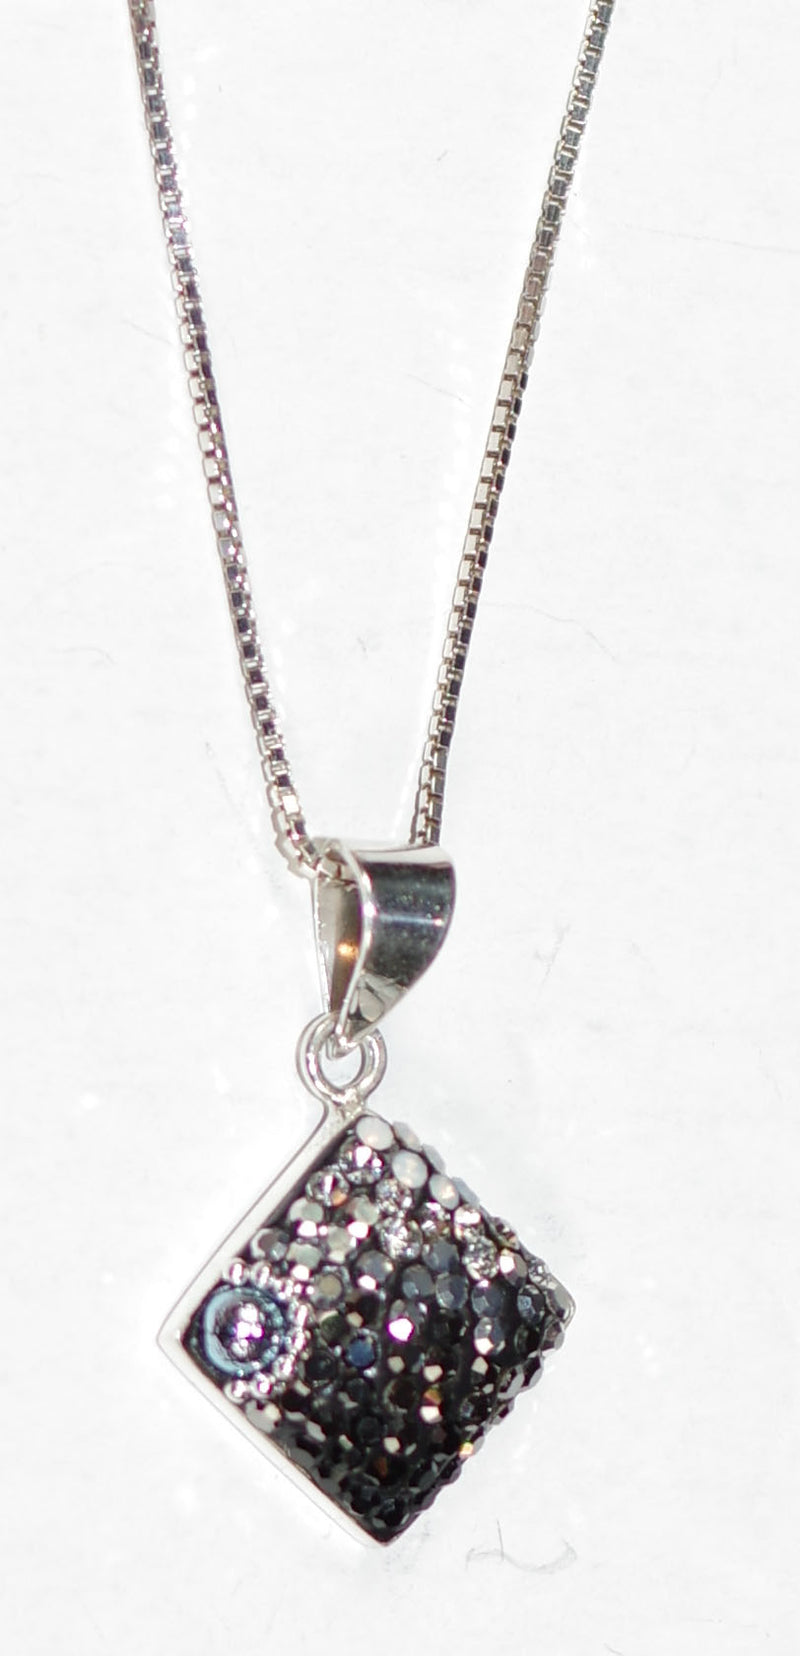 MOSAICO PENDANT PP-8525-H: multi color Austrian crystals in 5/8" solid silver pendant, 18-20 inch adjustable silver chain